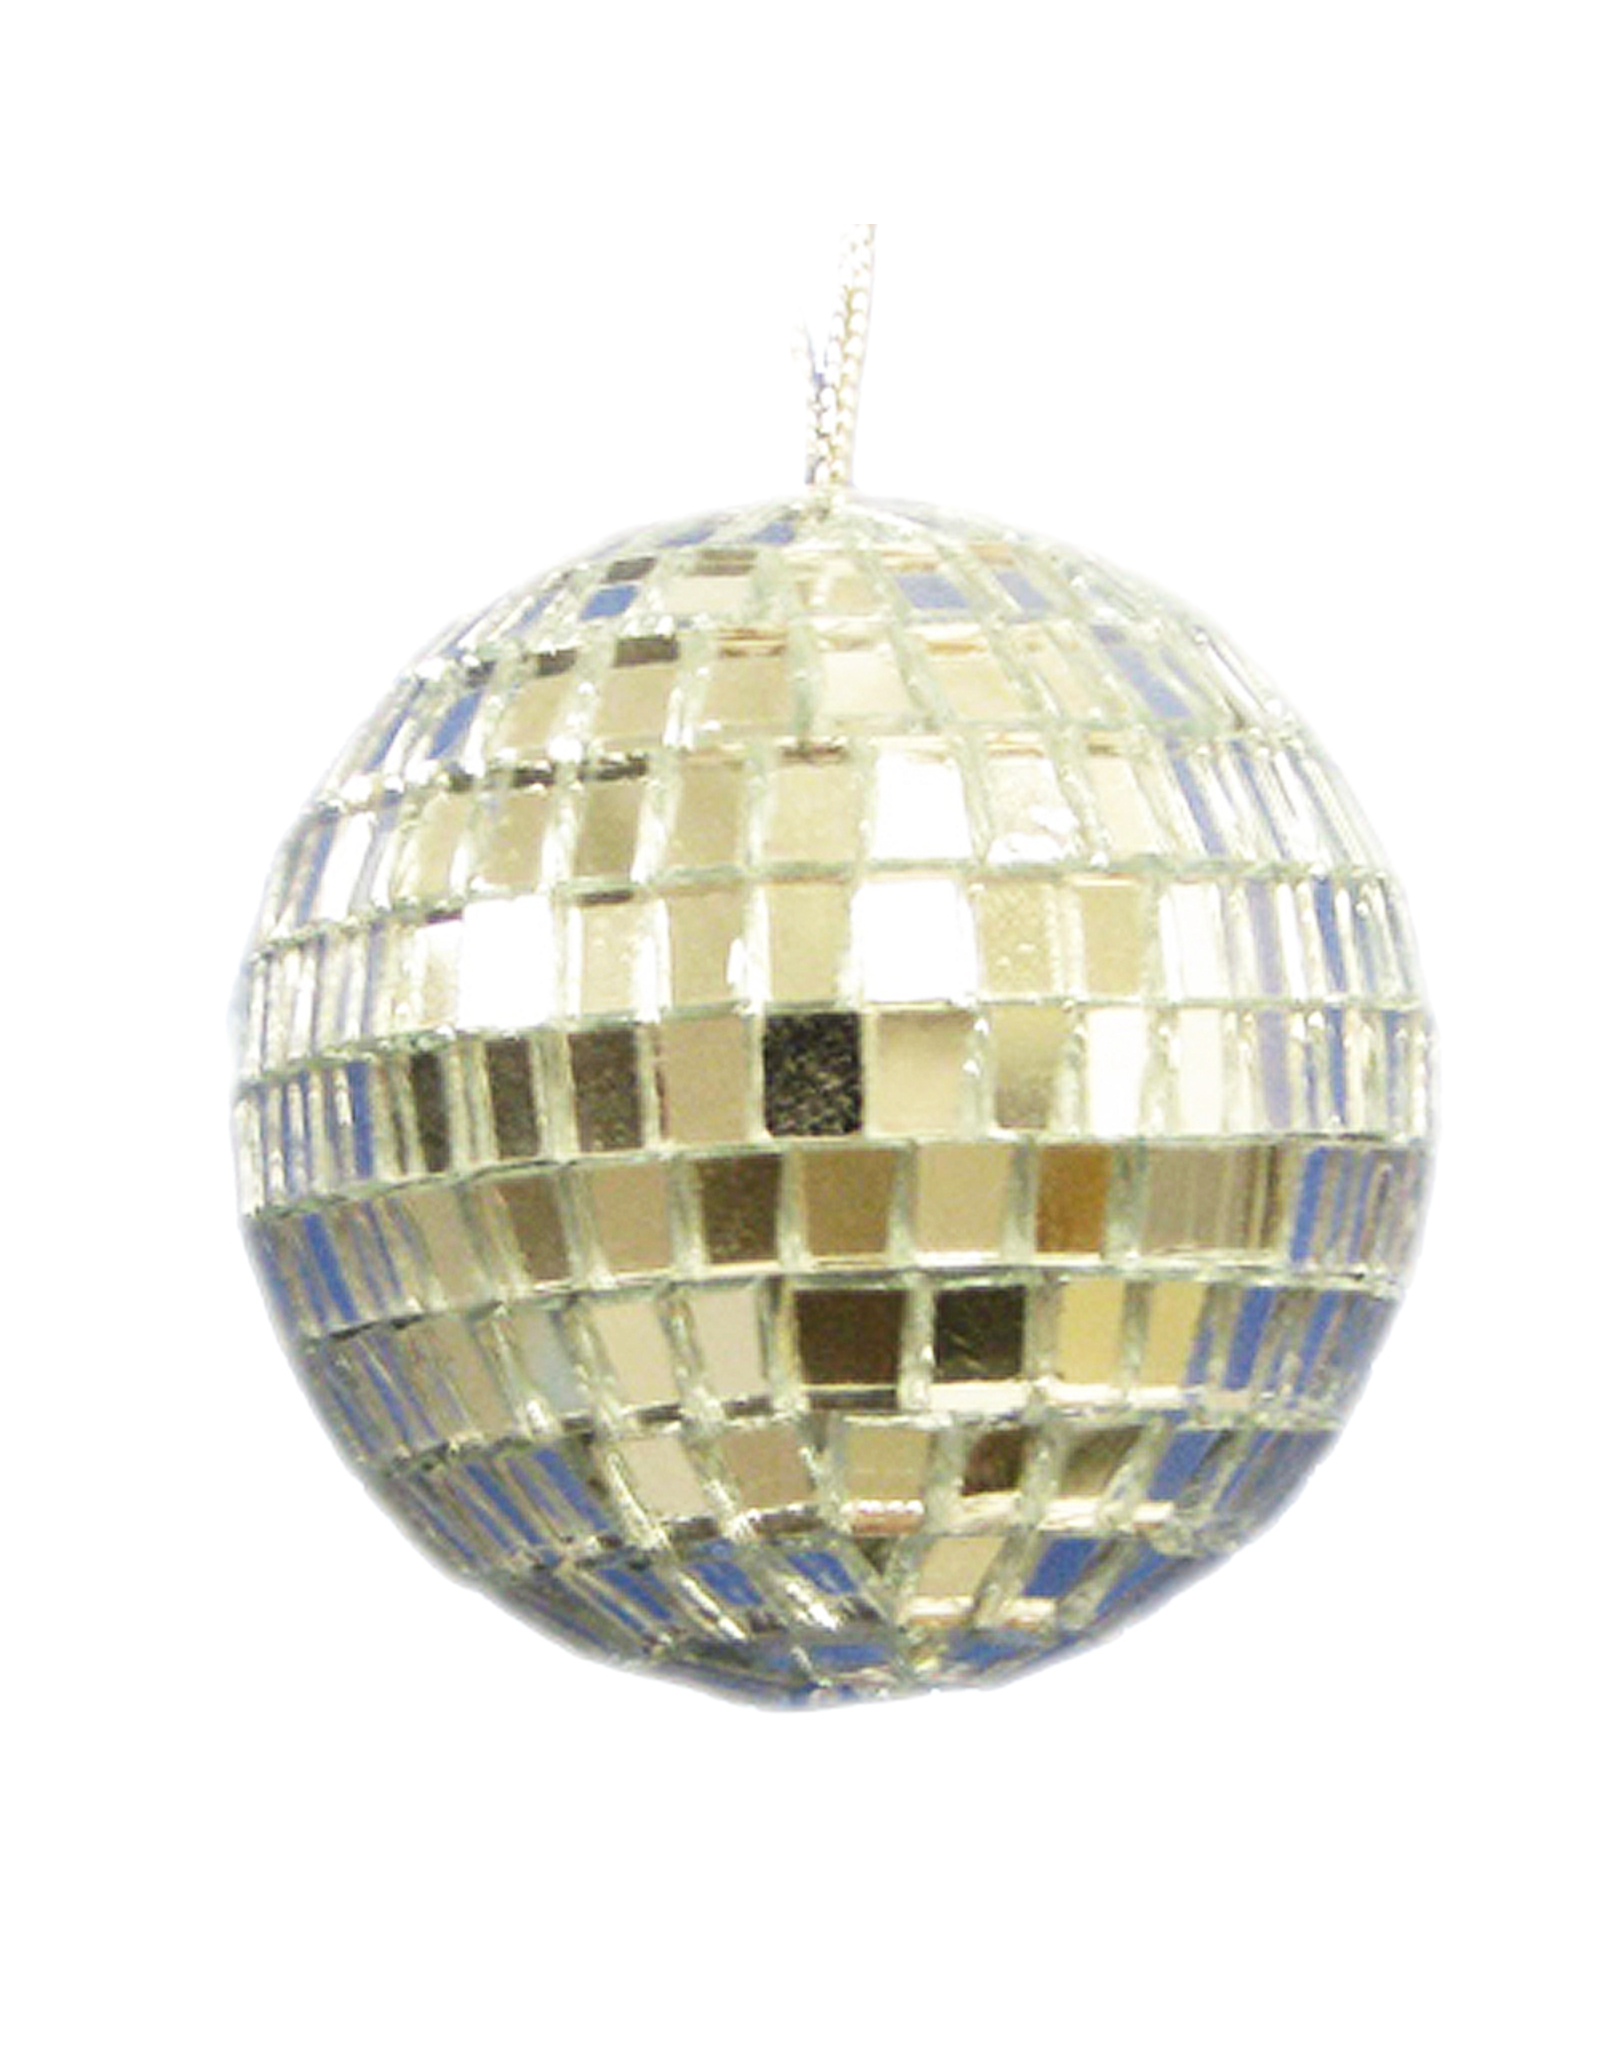 Kurt Adler Mirror Ball Ornaments 4-inch Disco Balls Set of 4